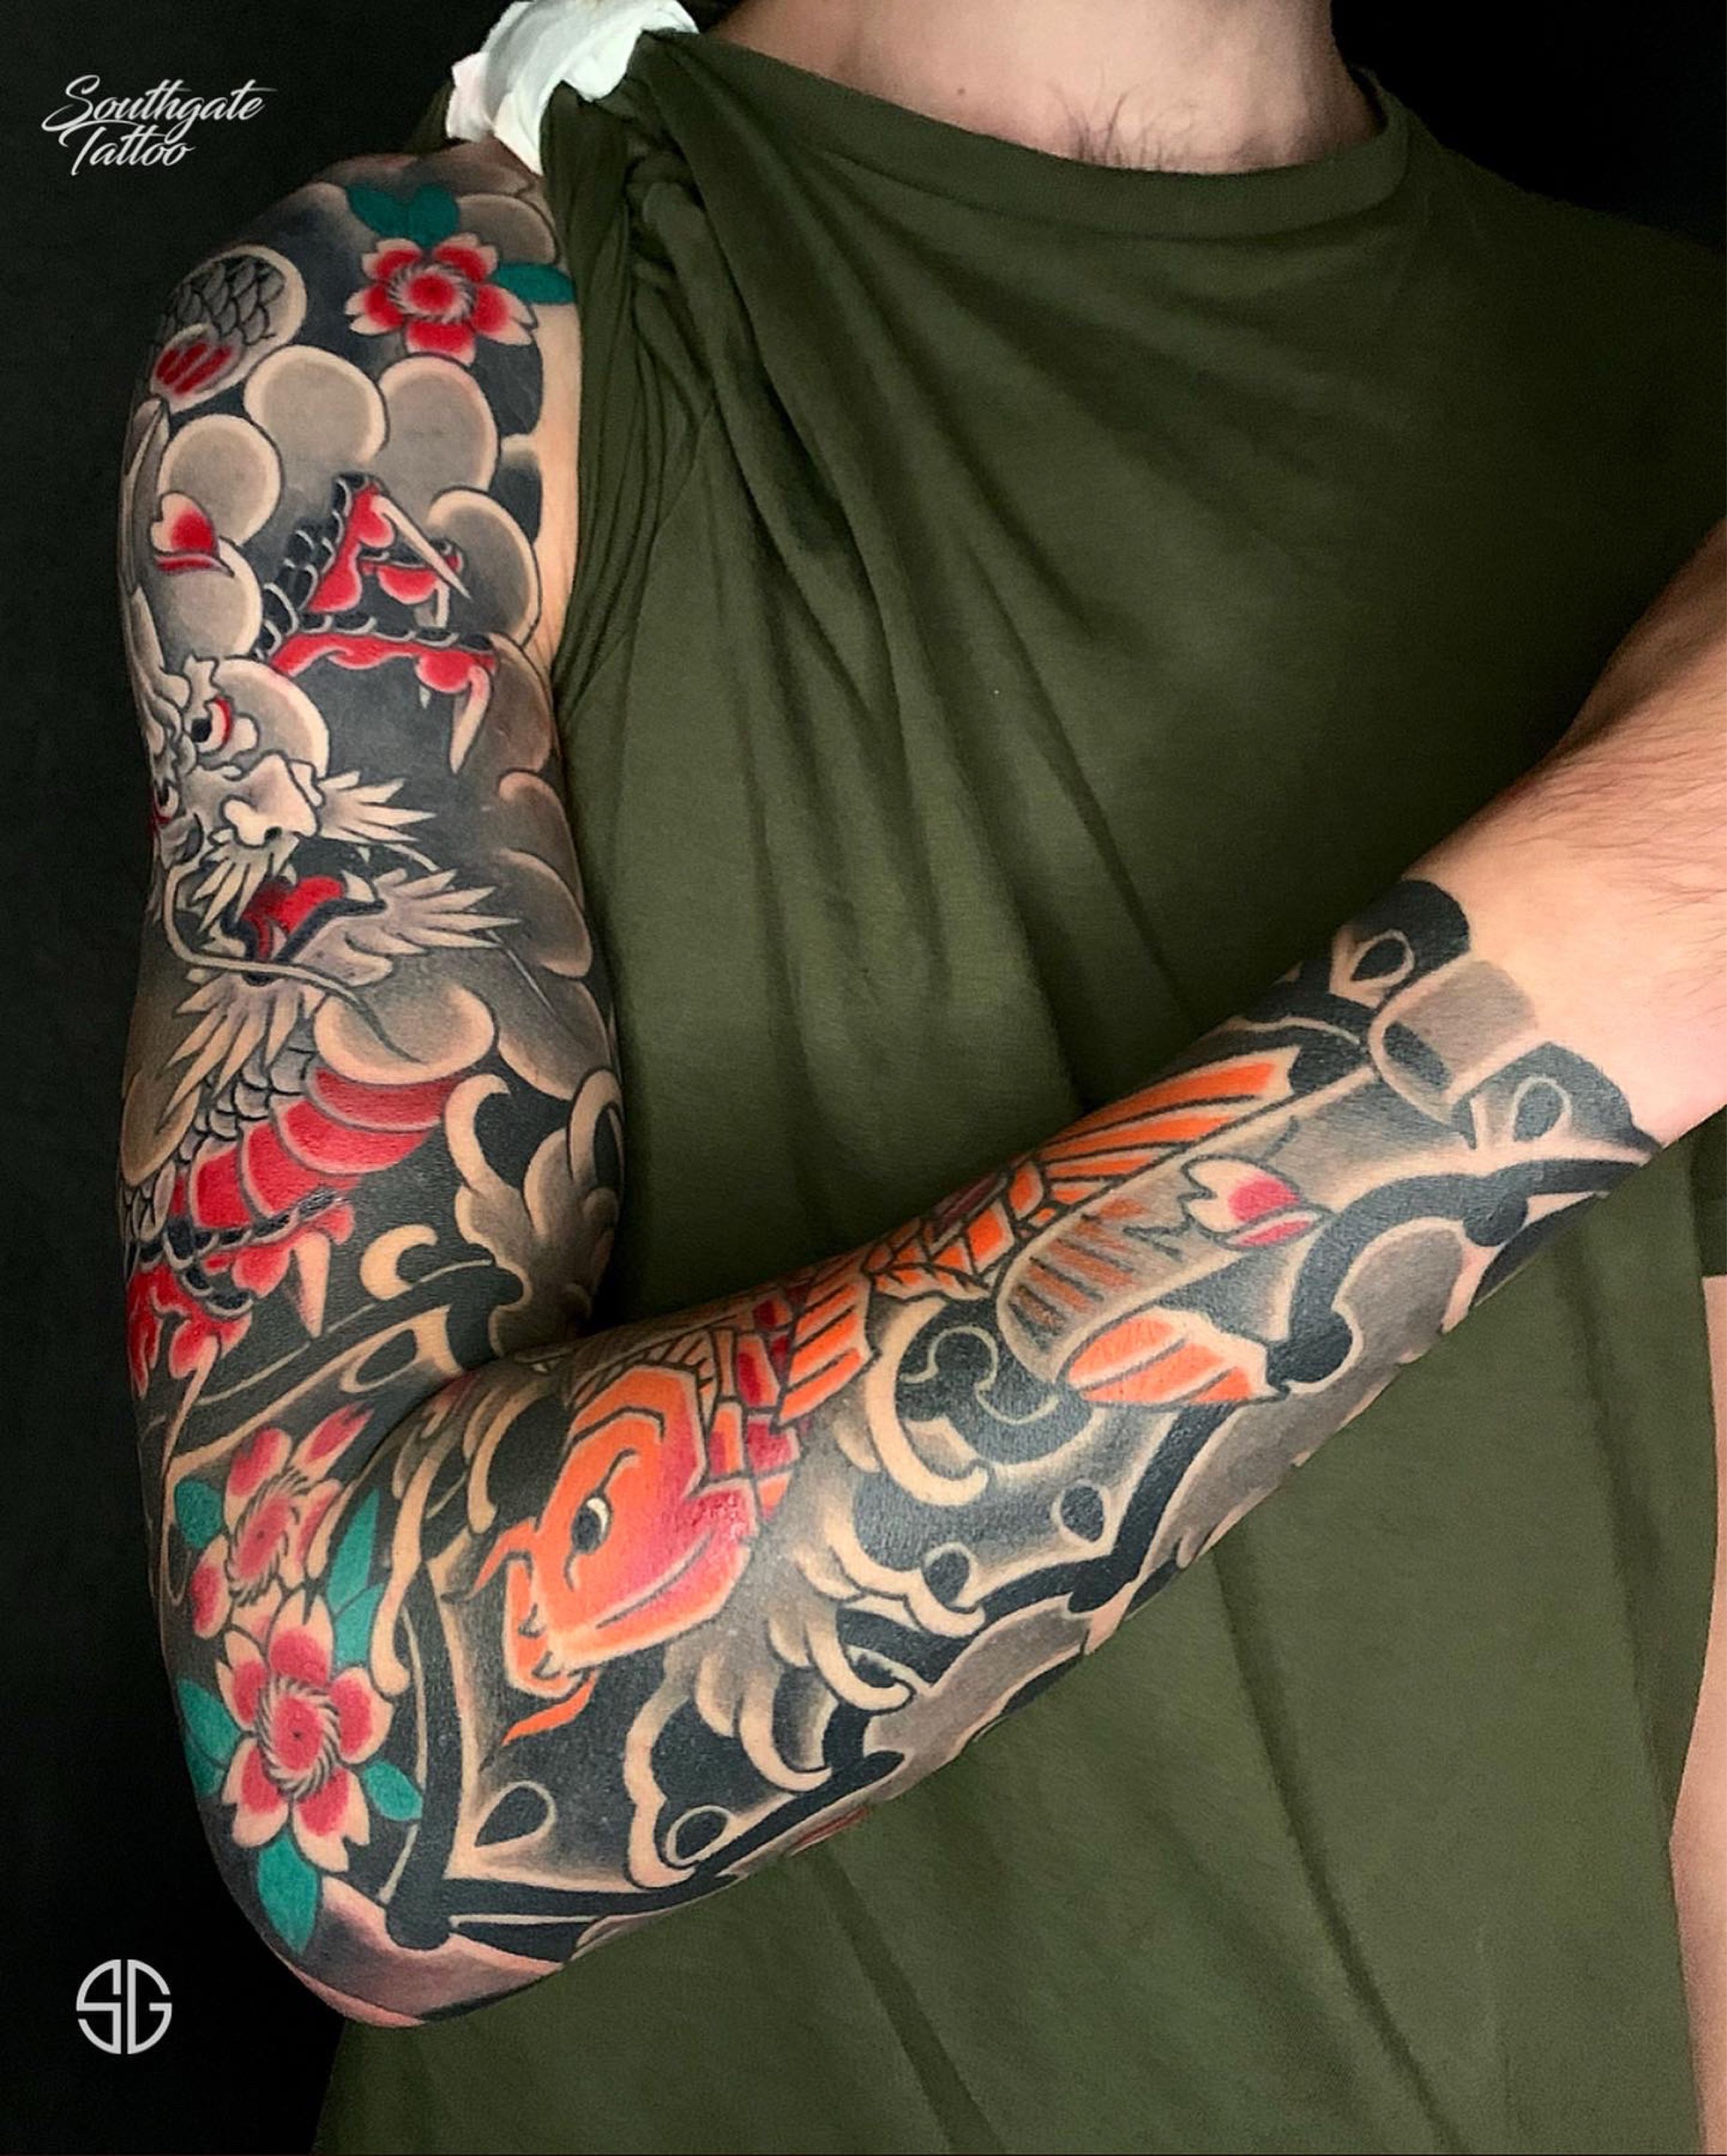 Gargoyle Tattoos: Meanings, Tattoo Designs & More